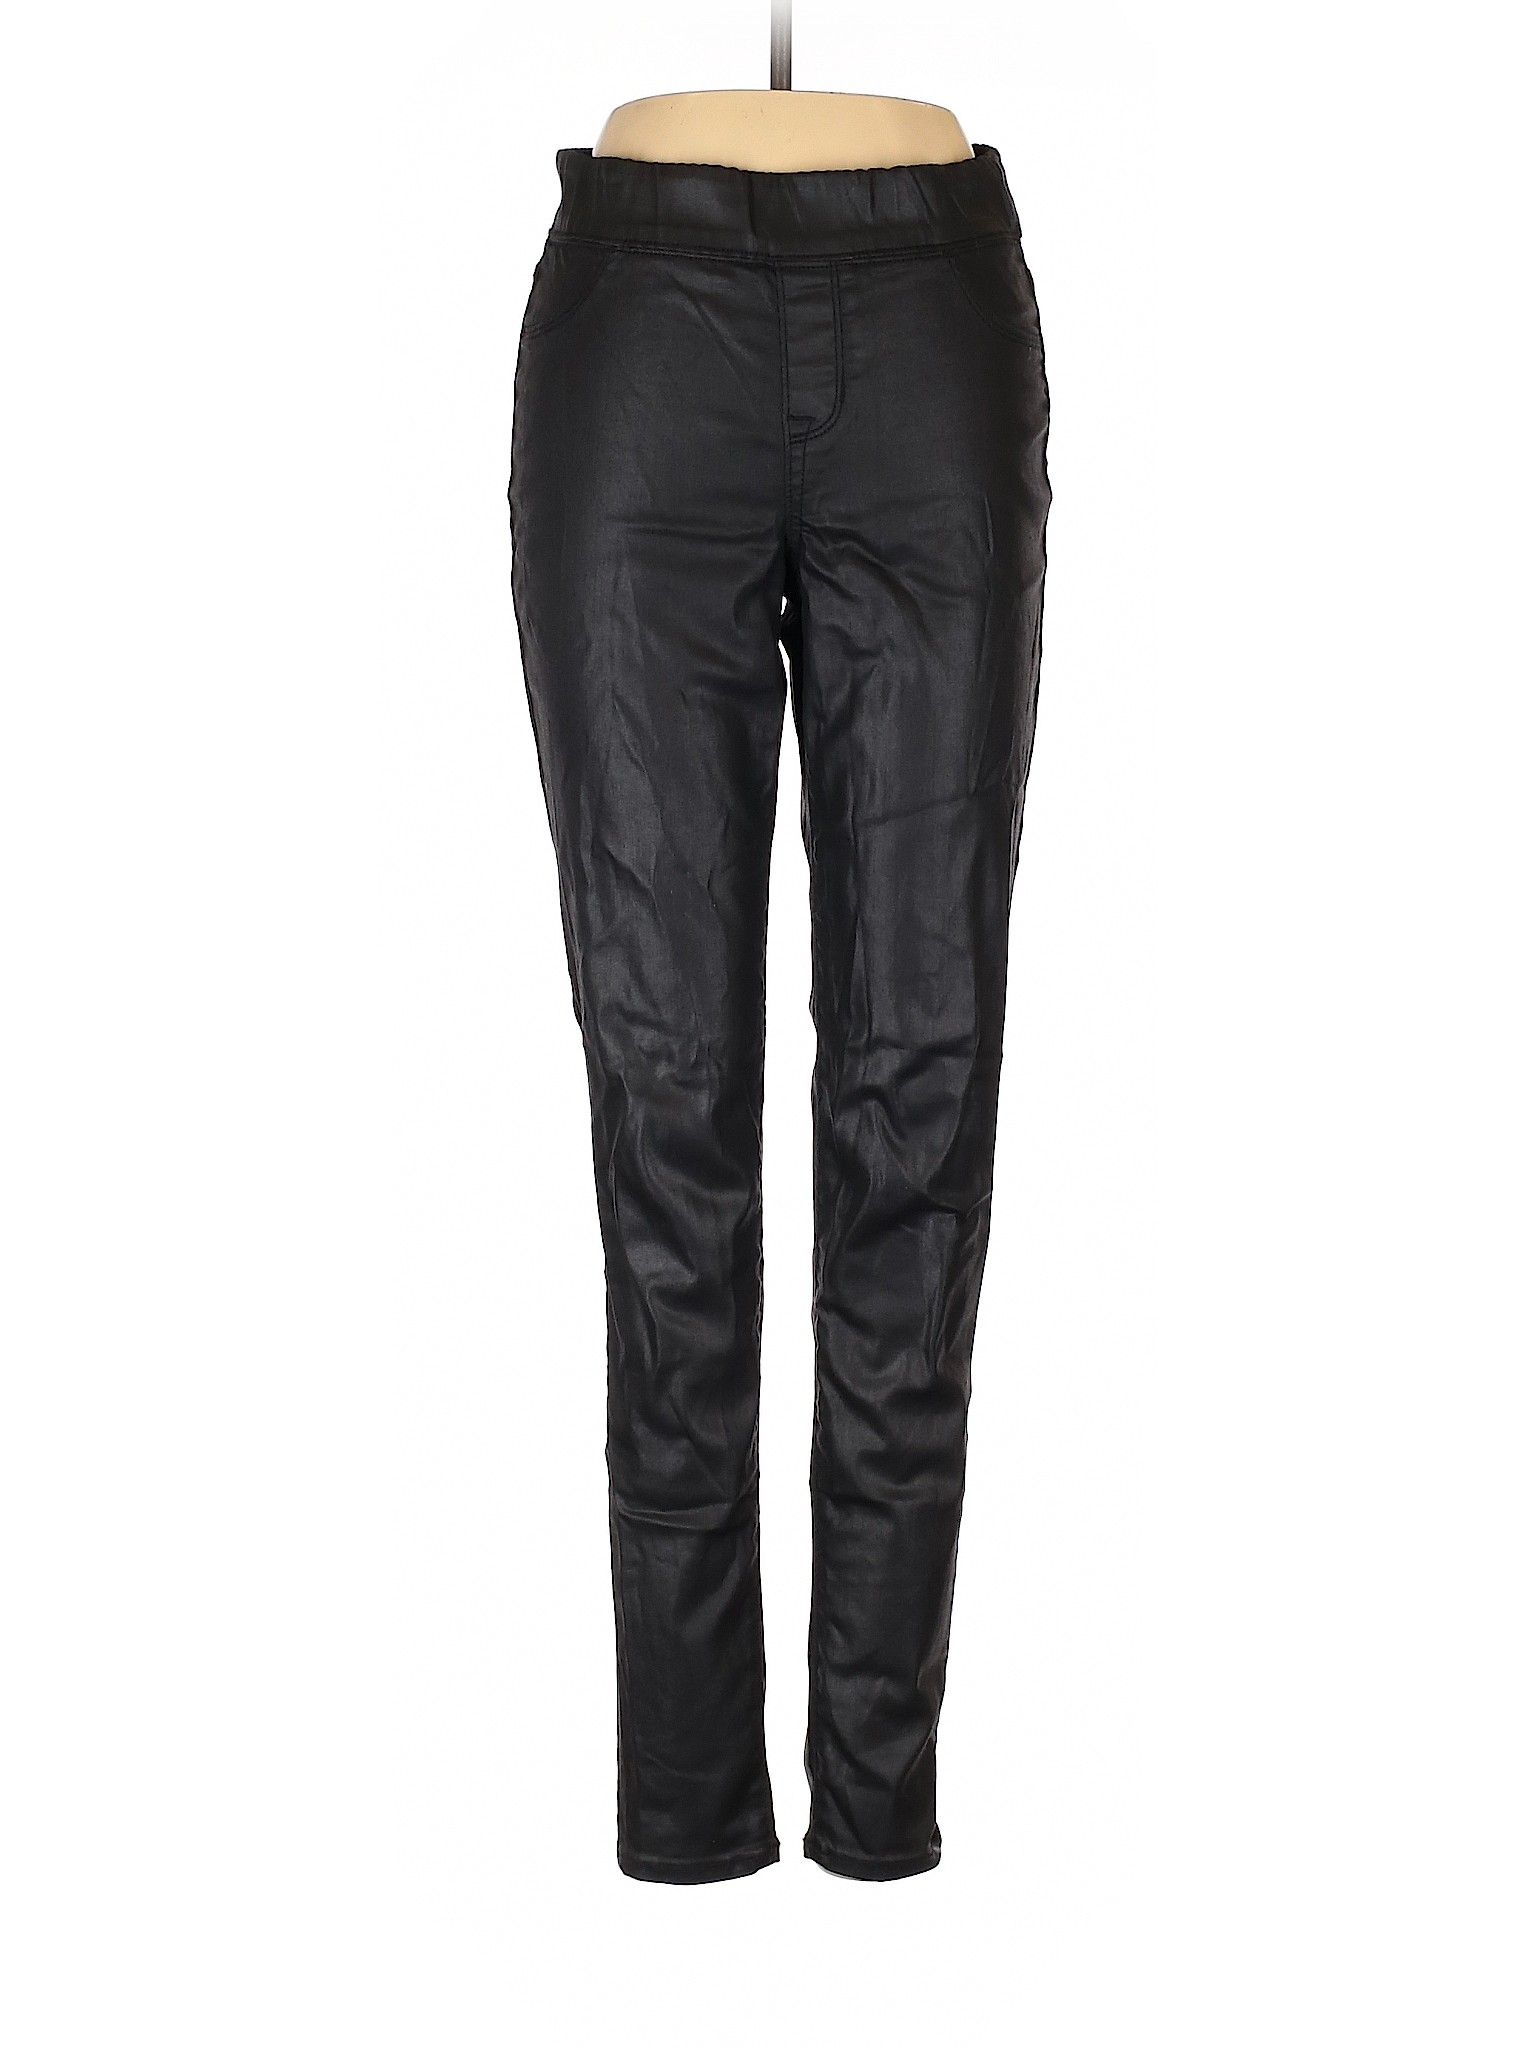 Old Navy Women Black Faux Leather Pants 2 | eBay